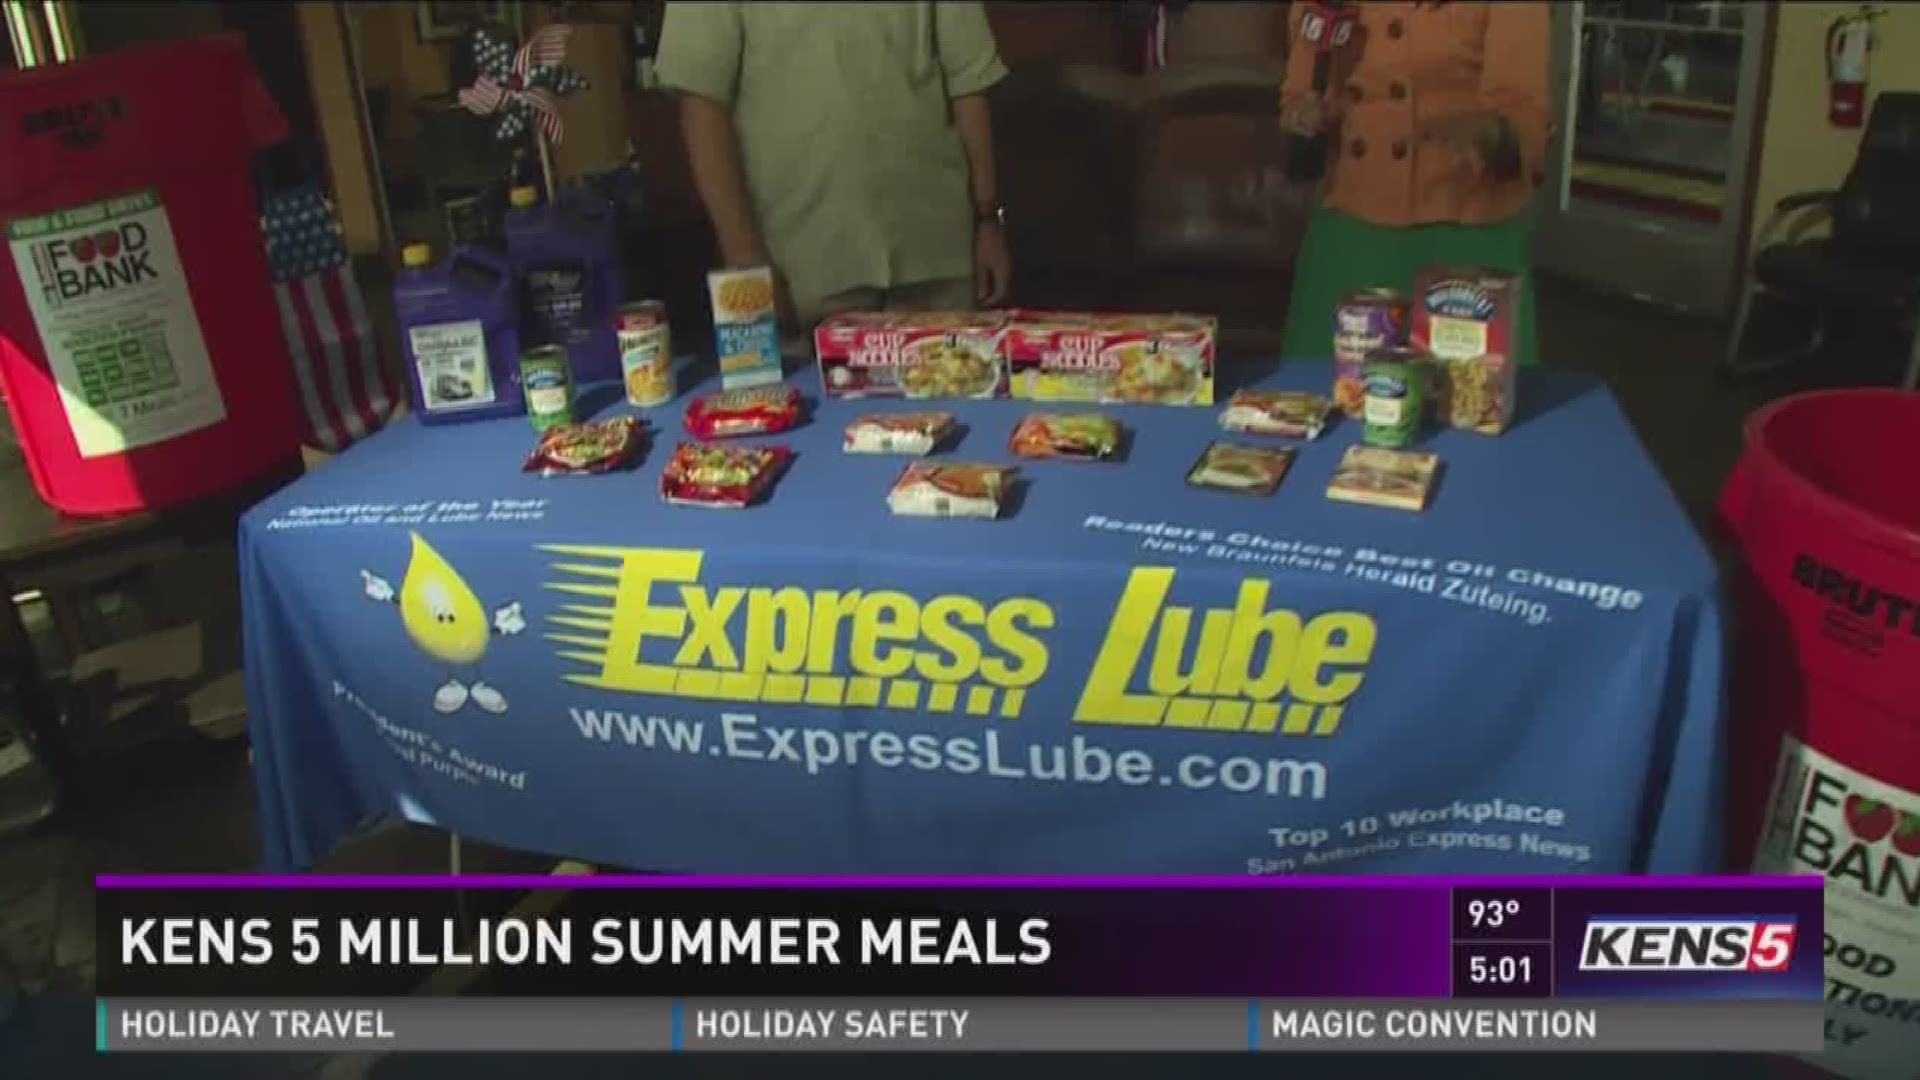 KENS 5 Million Summer Meals at 5